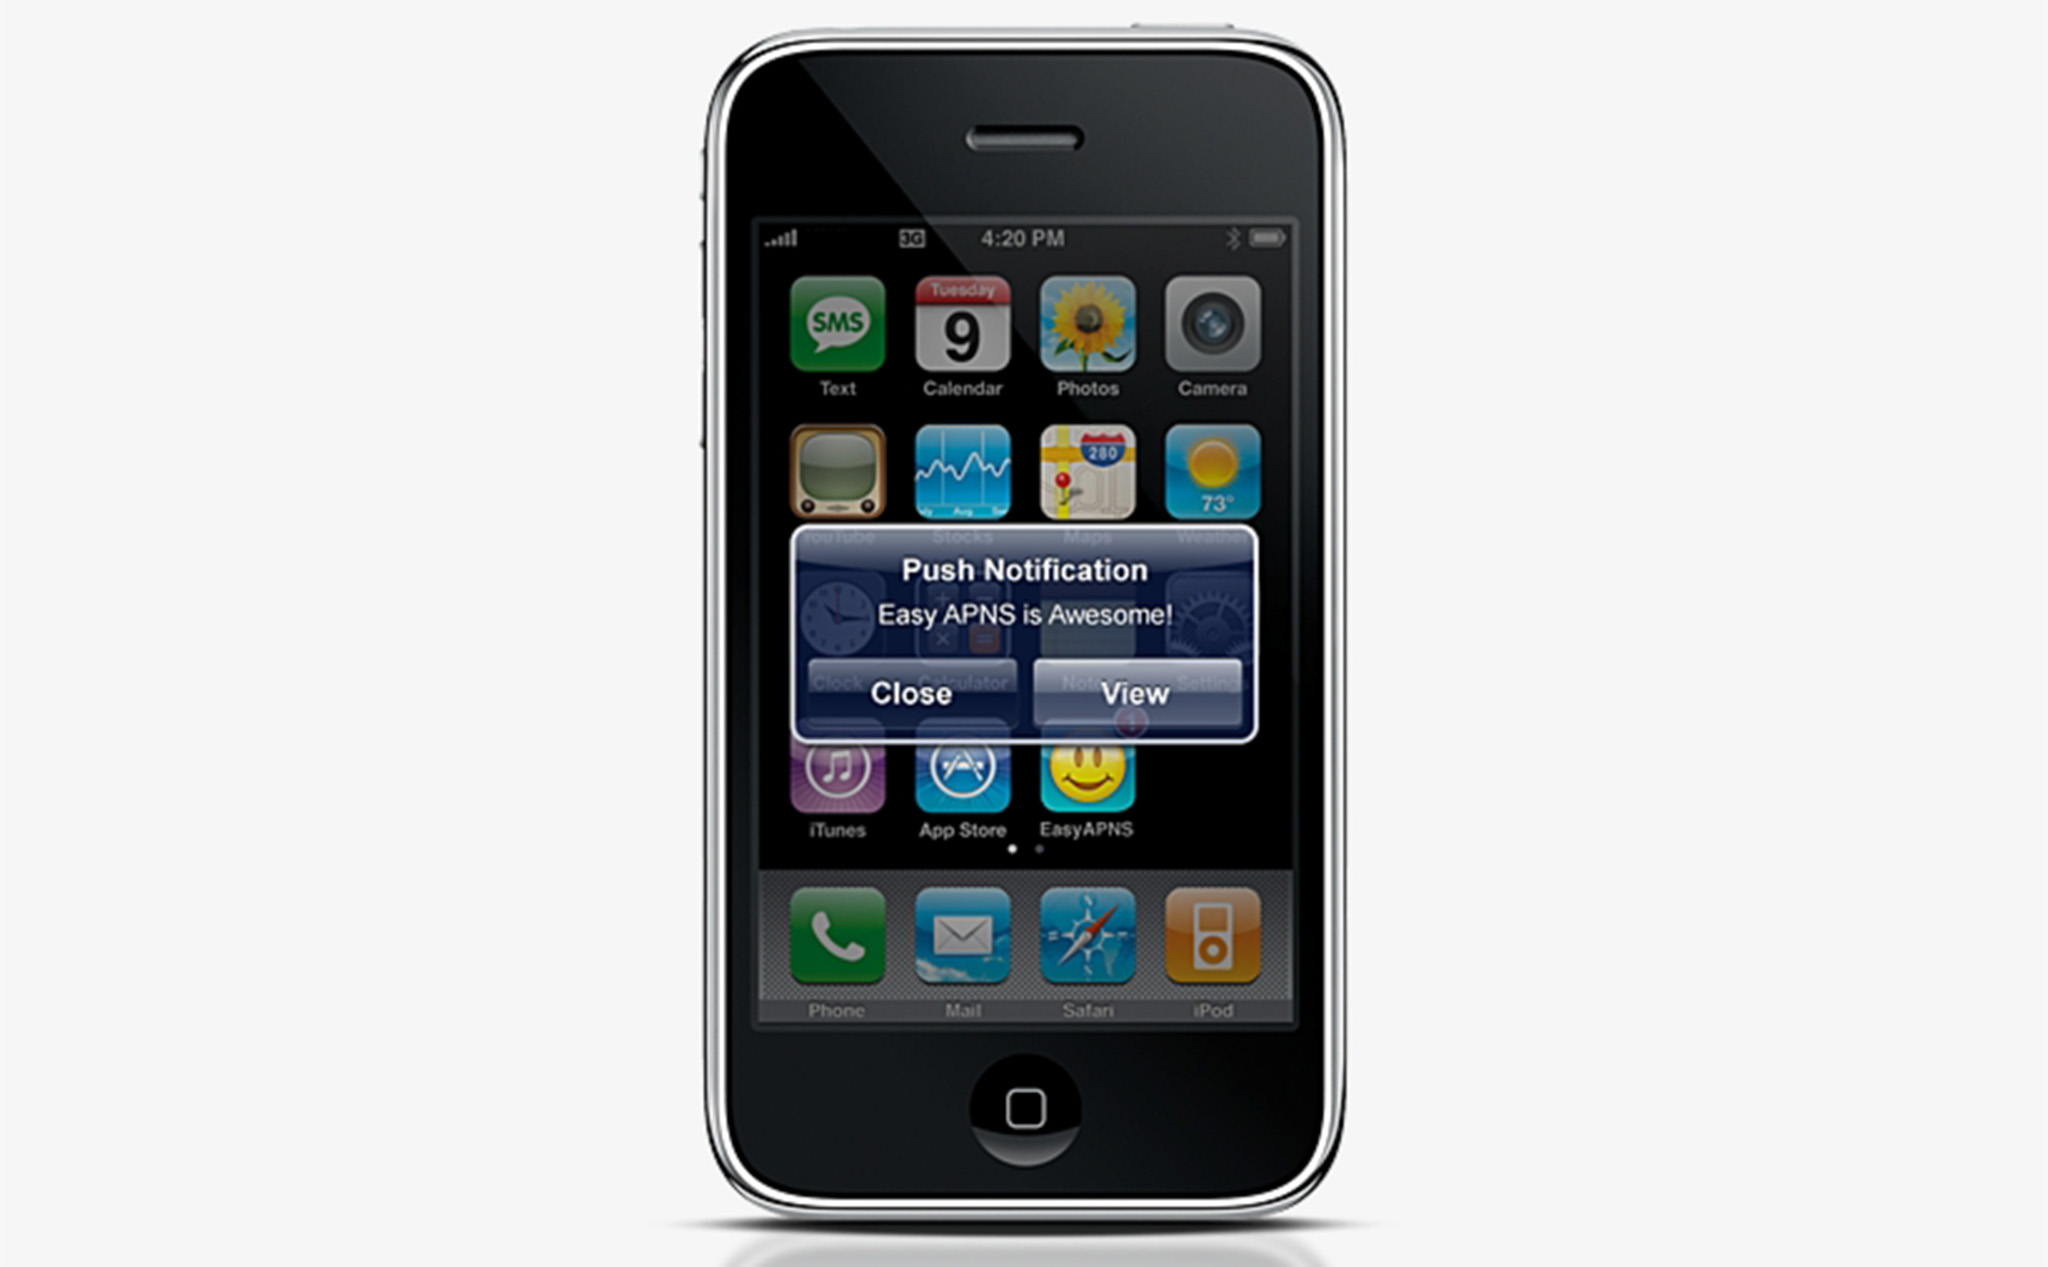 130-1304385_iphone-apple-iphone-3gs-32-gb-black-unlocked.png.jpeg